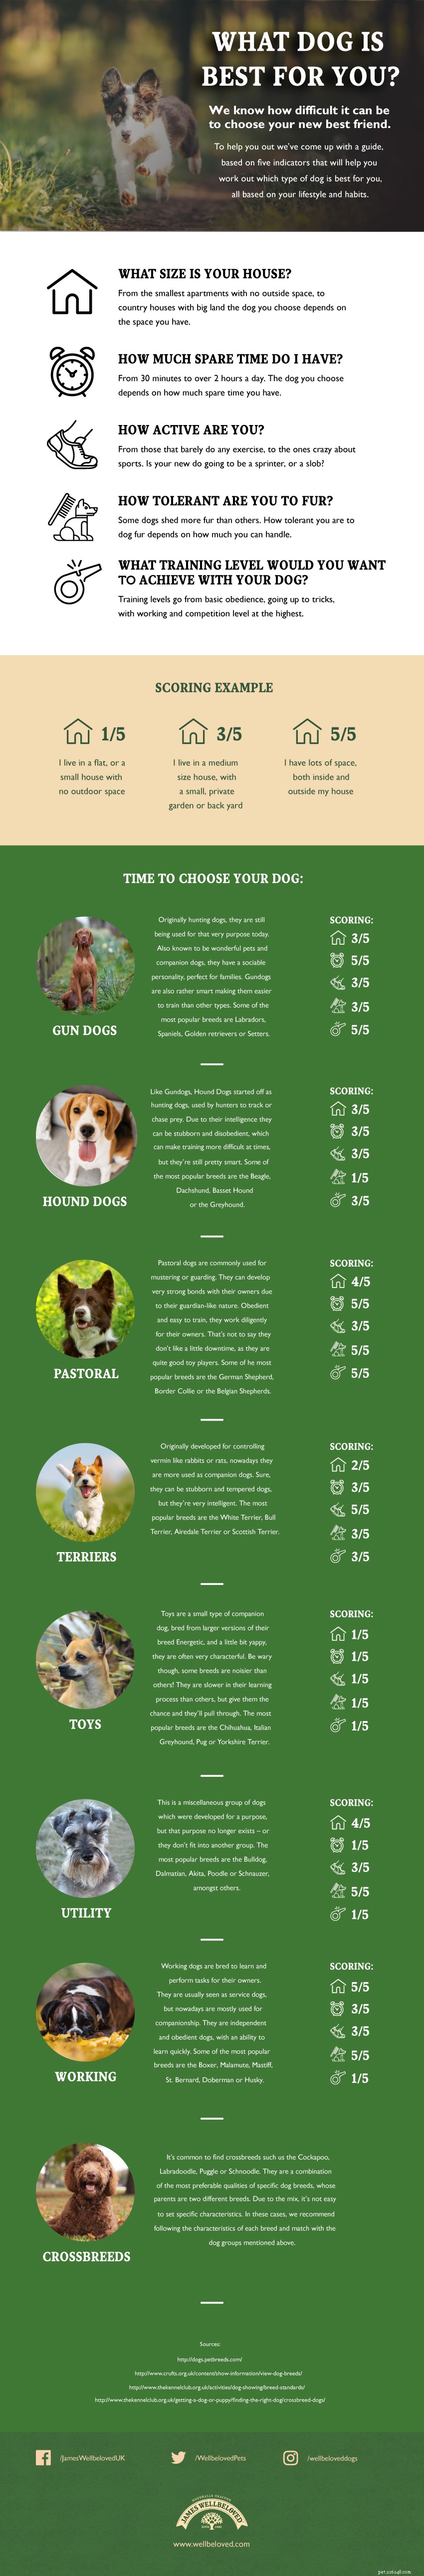 Che cane dovresti prendere - Infografica